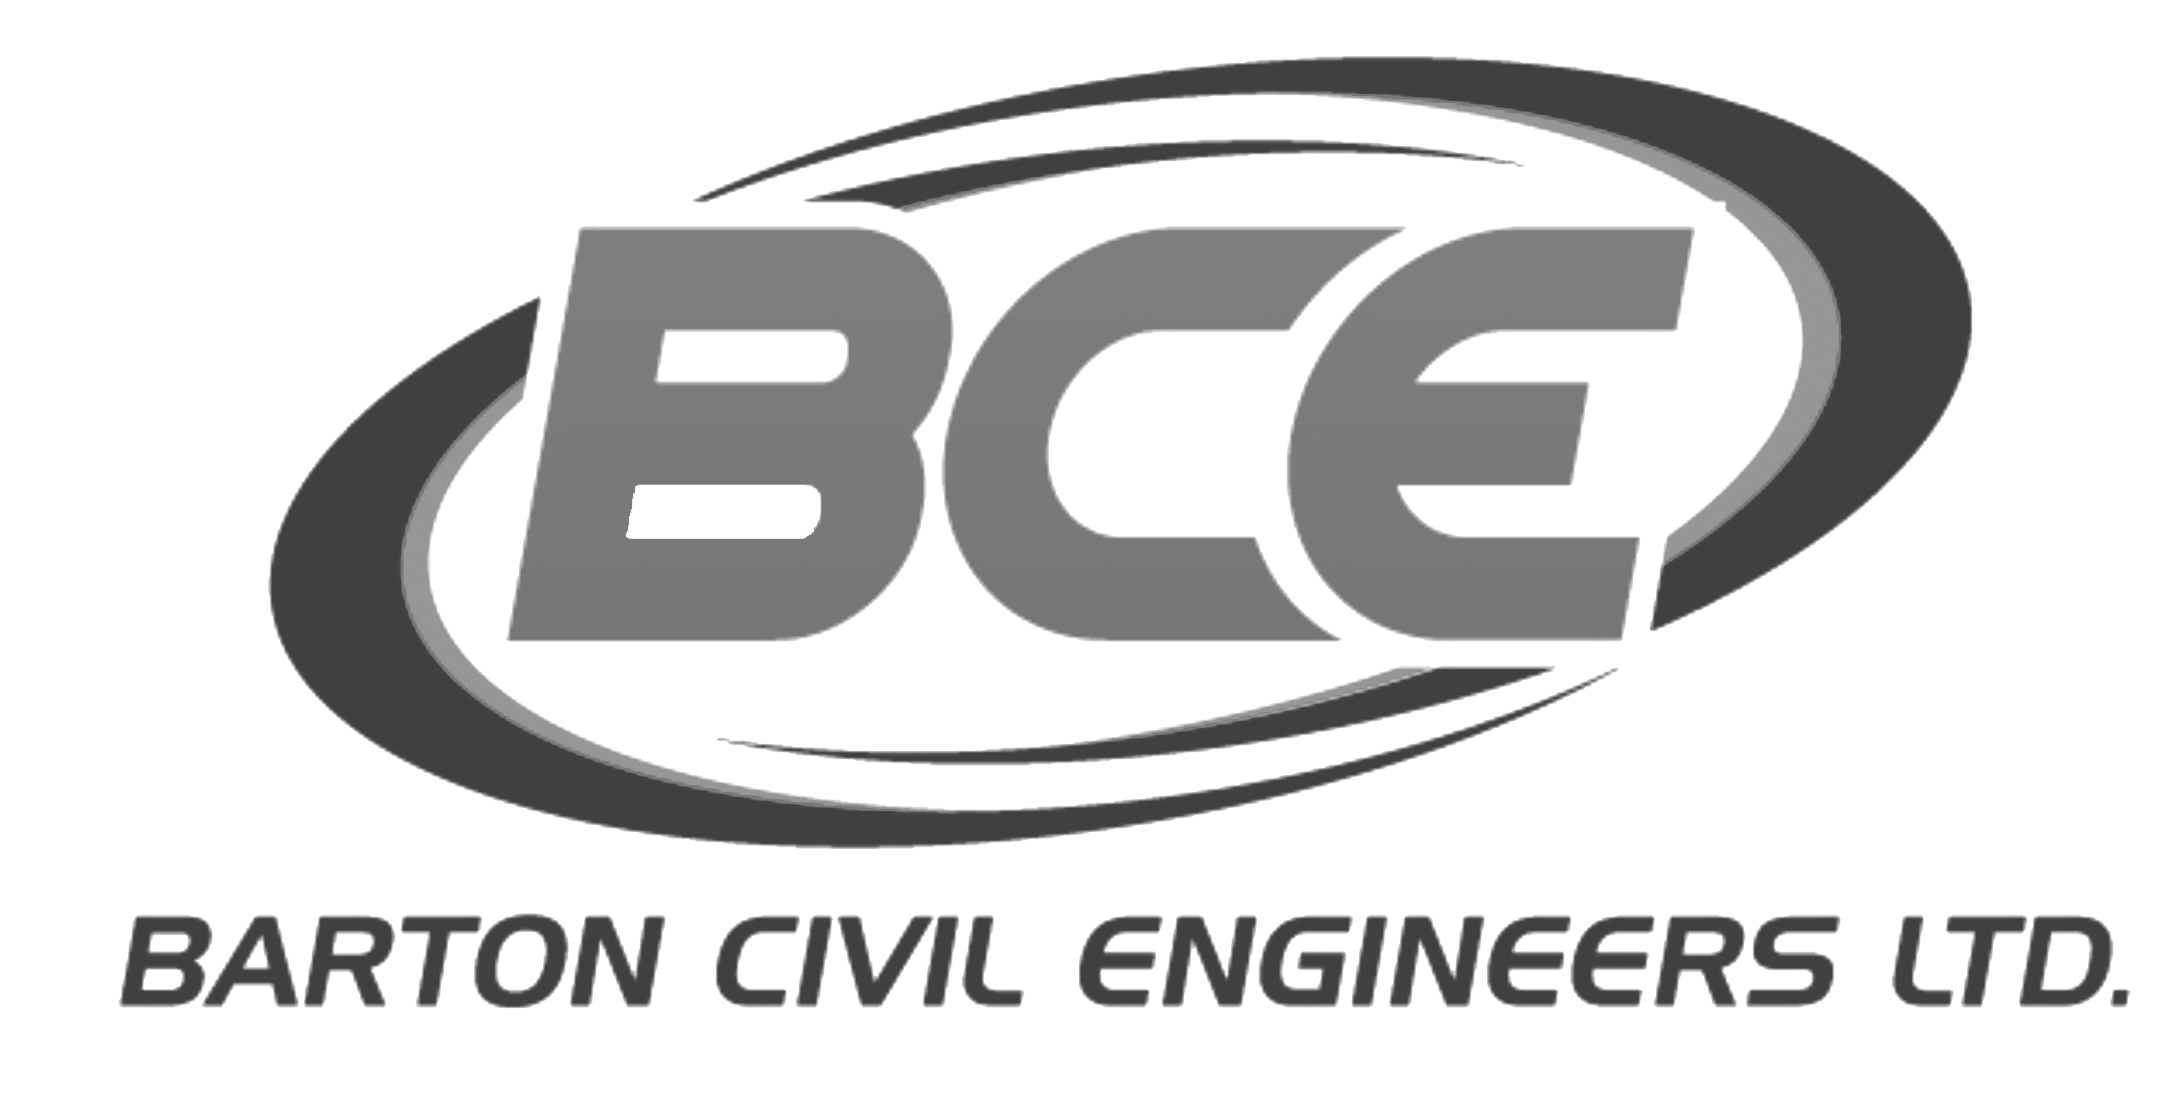 We're sponsored by Barton Civil Engineers Ltd